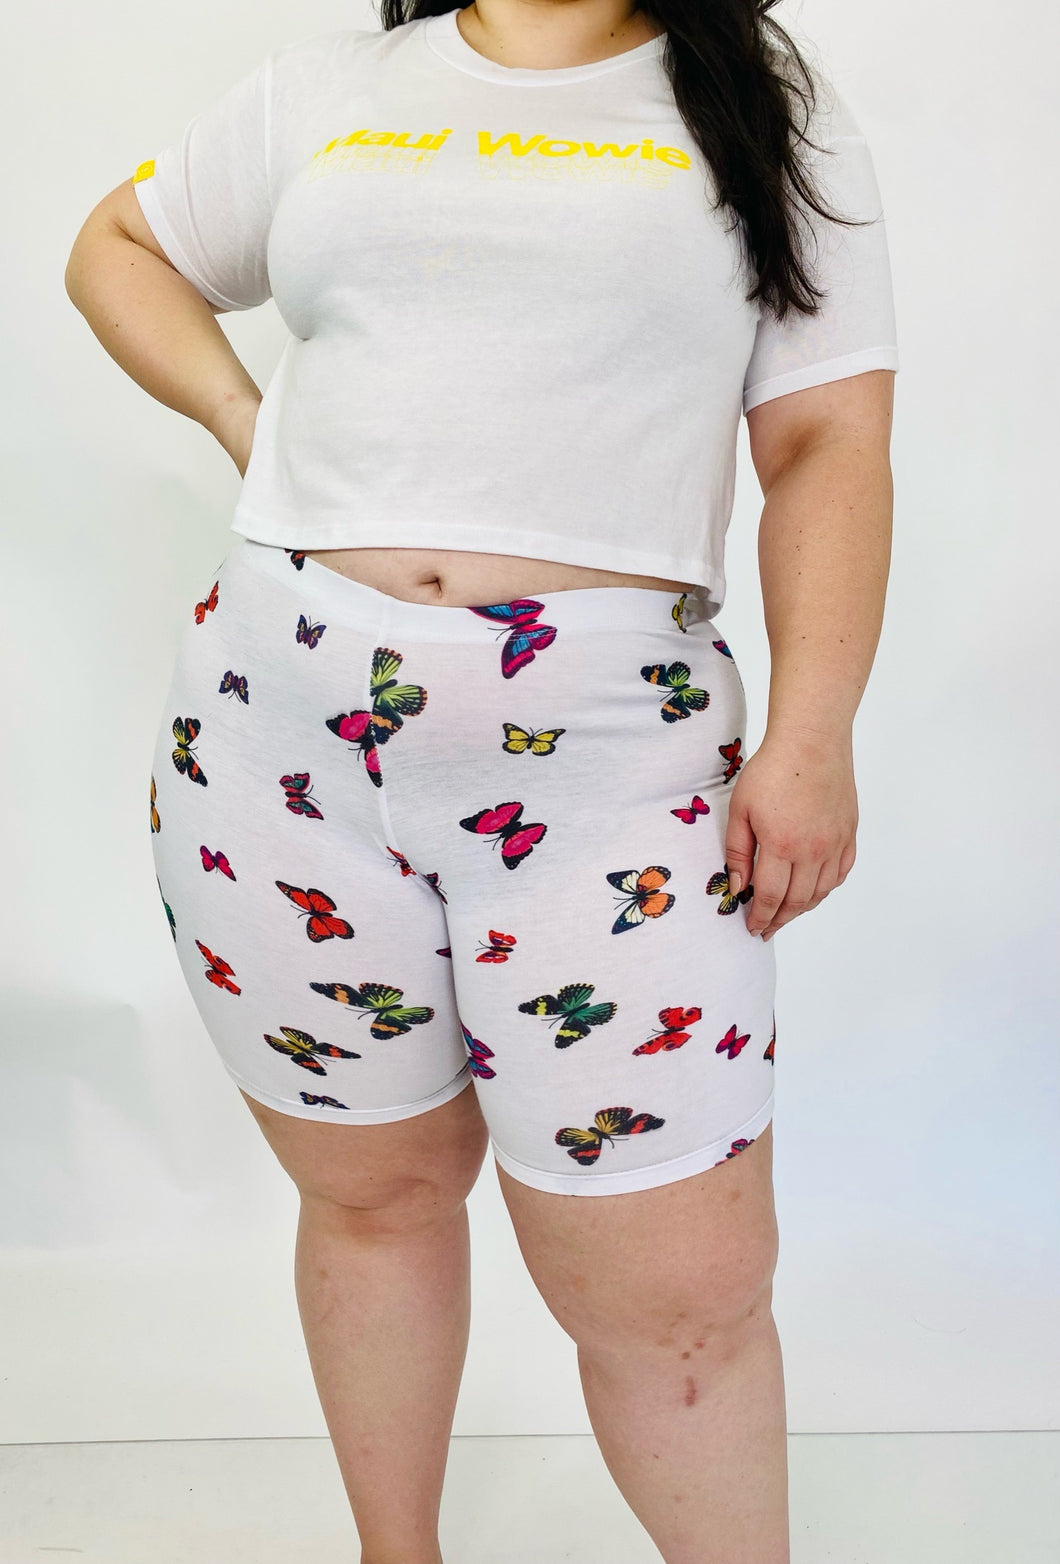 Fashion Nova White Bike Shorts with Colorful Butterfly Pattern